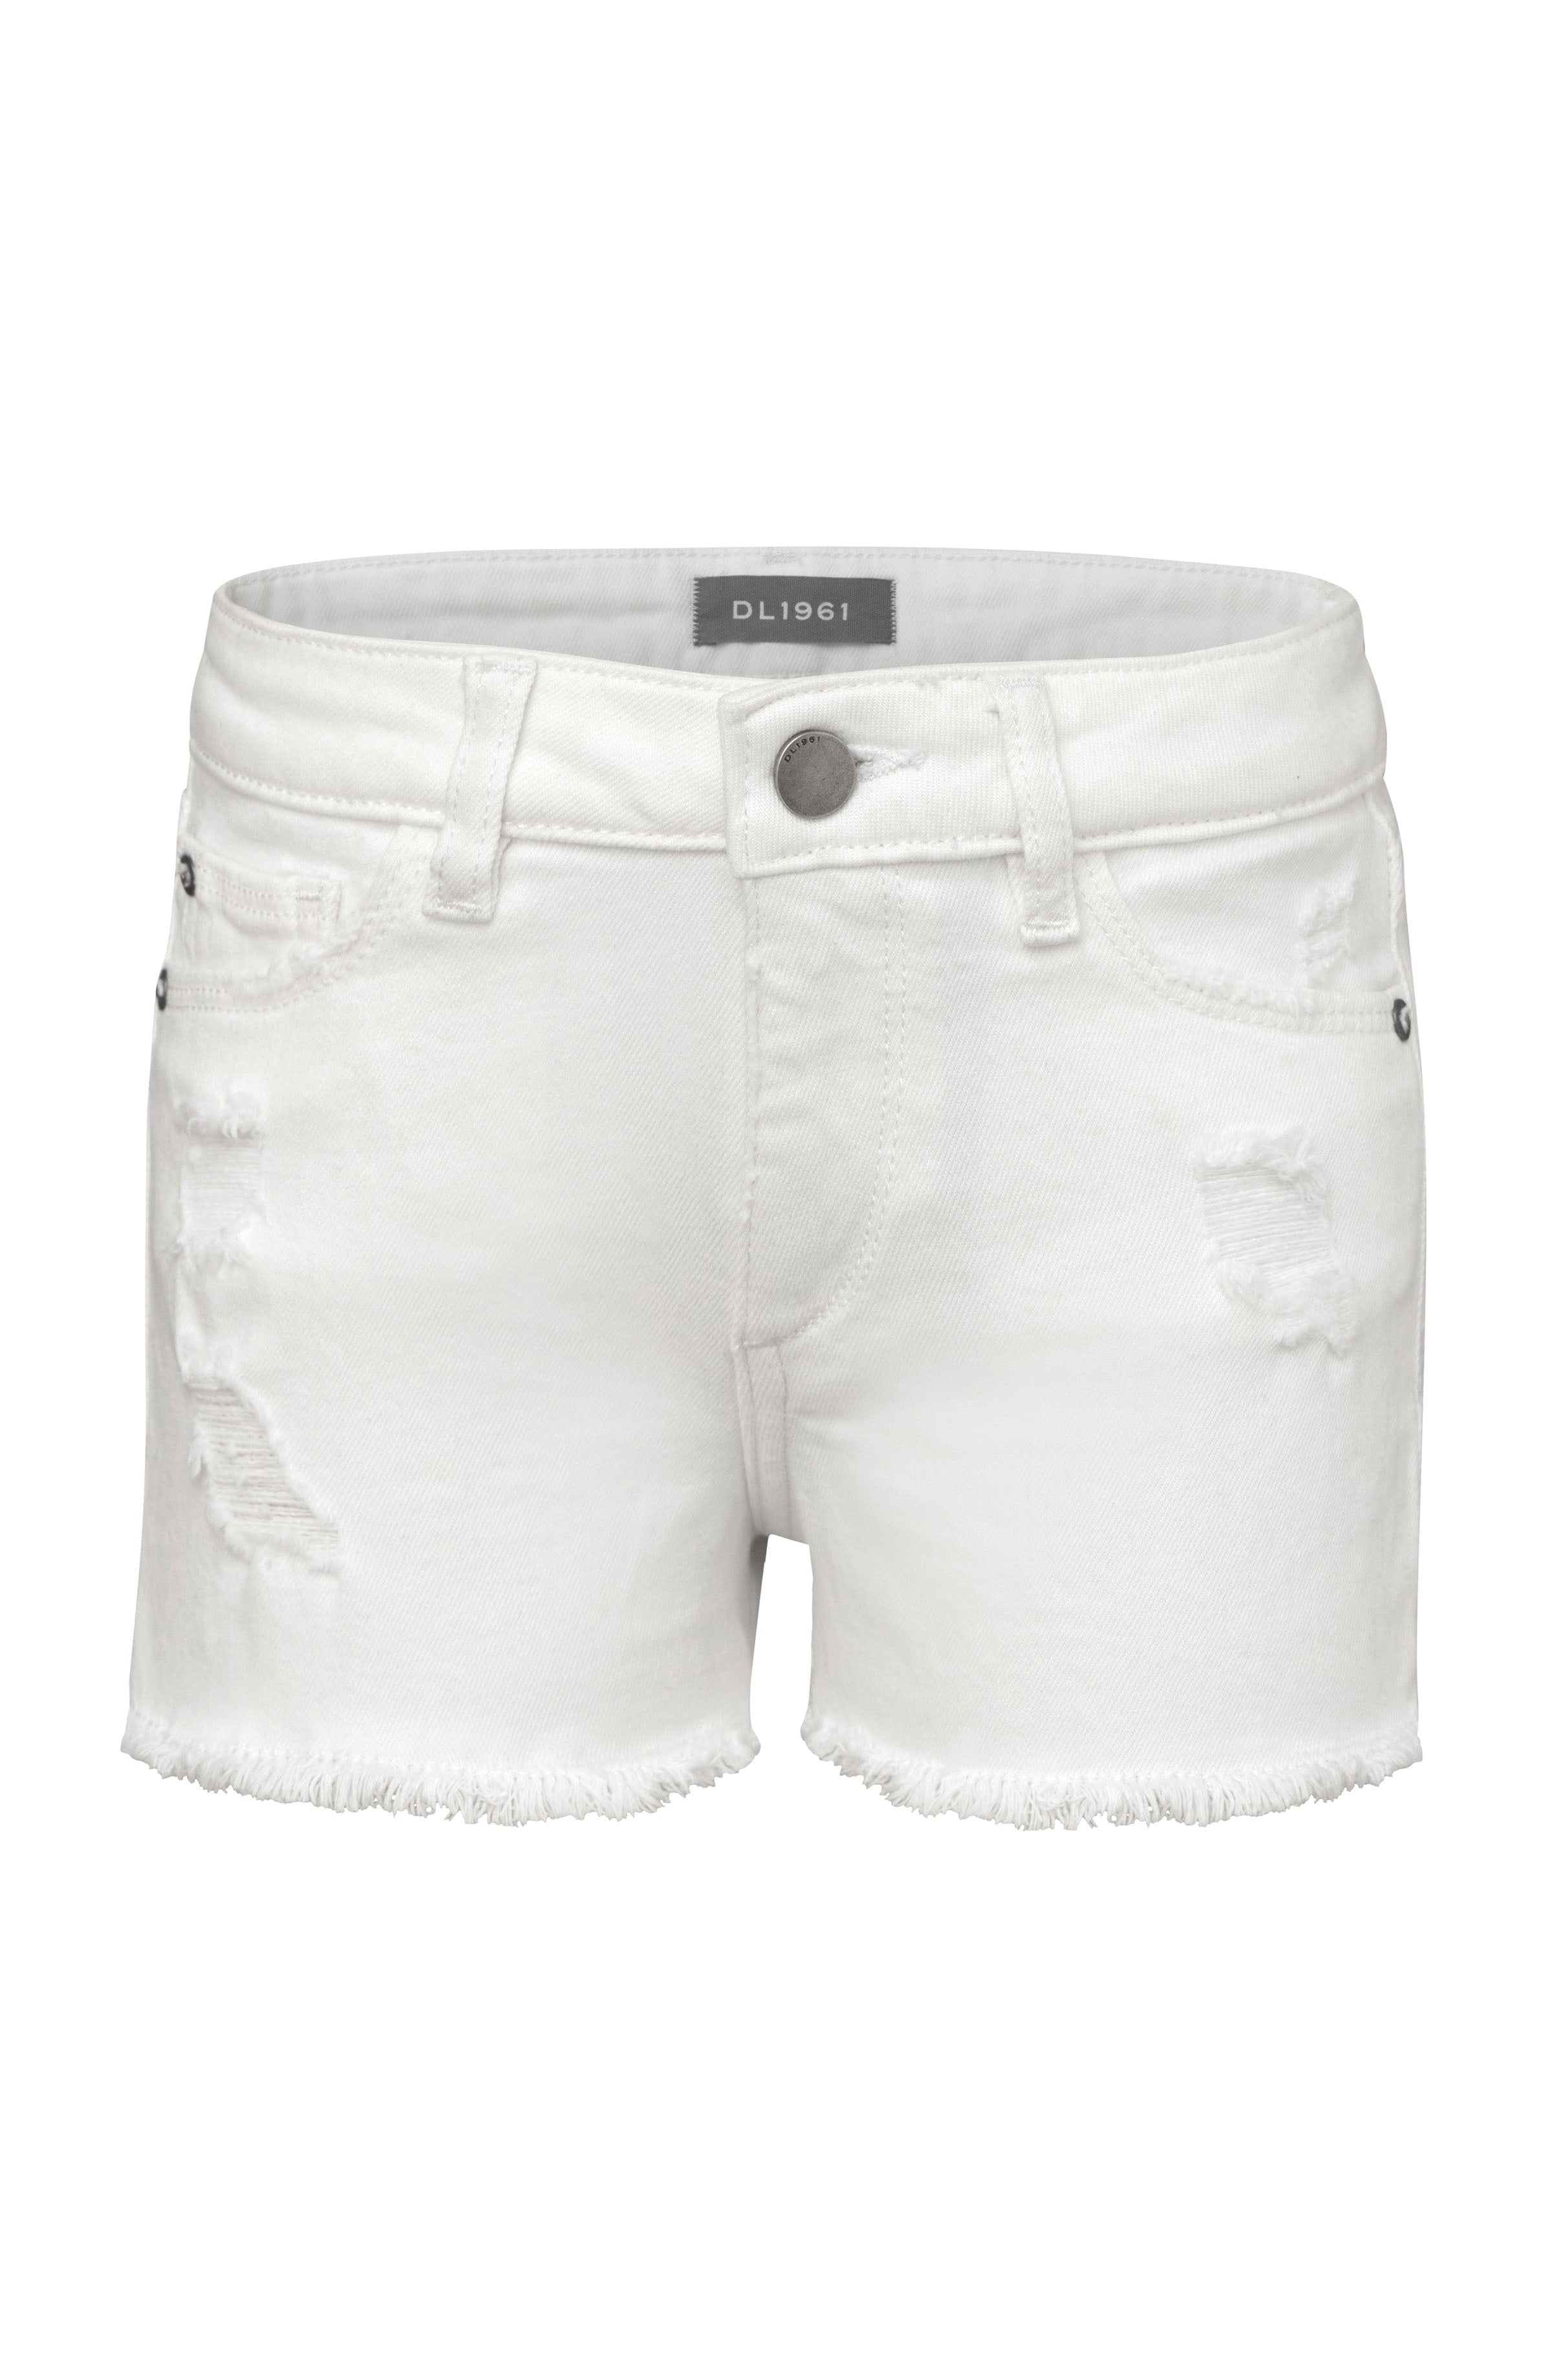 DL11961 Lucy Wilshire Denim Shorts